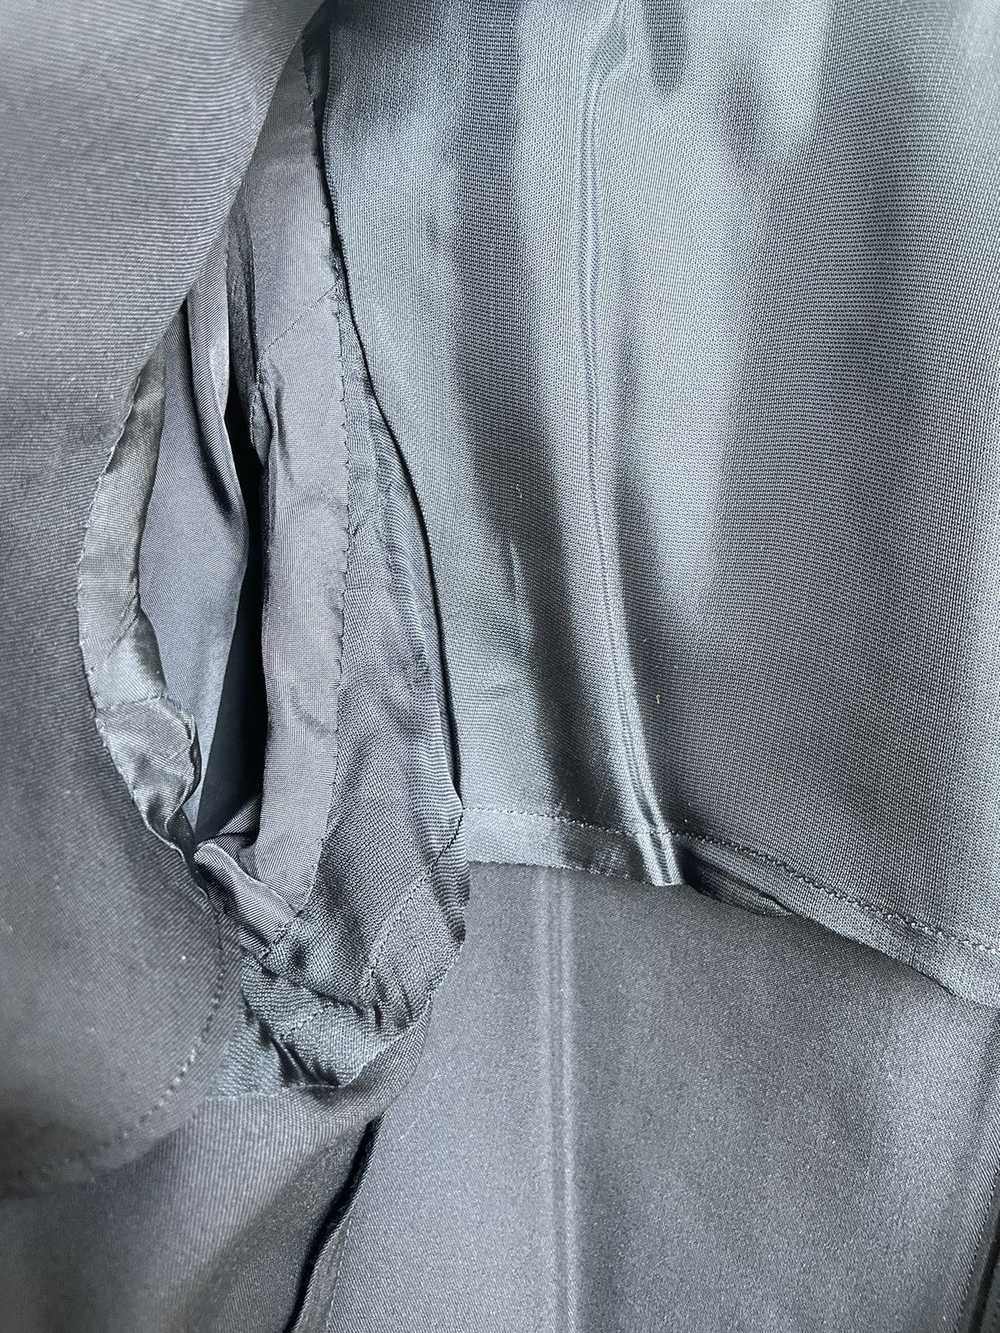 Yohji Yamamoto Pour Homme SS 2000 Seatbelt Jacket - image 6